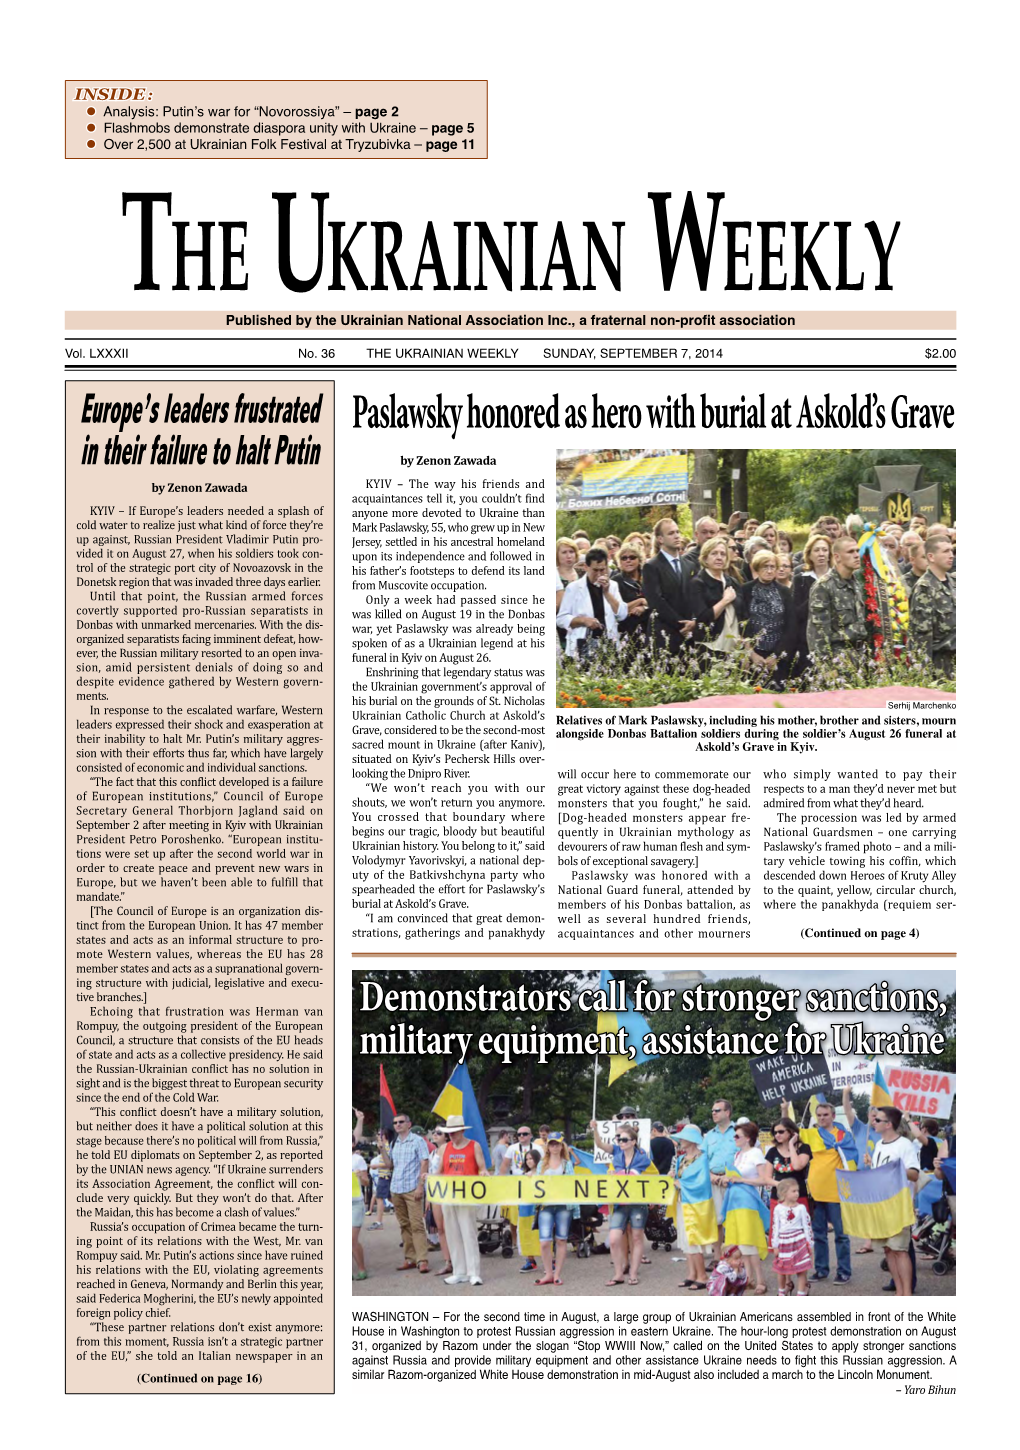 The Ukrainian Weekly 2014, No.36